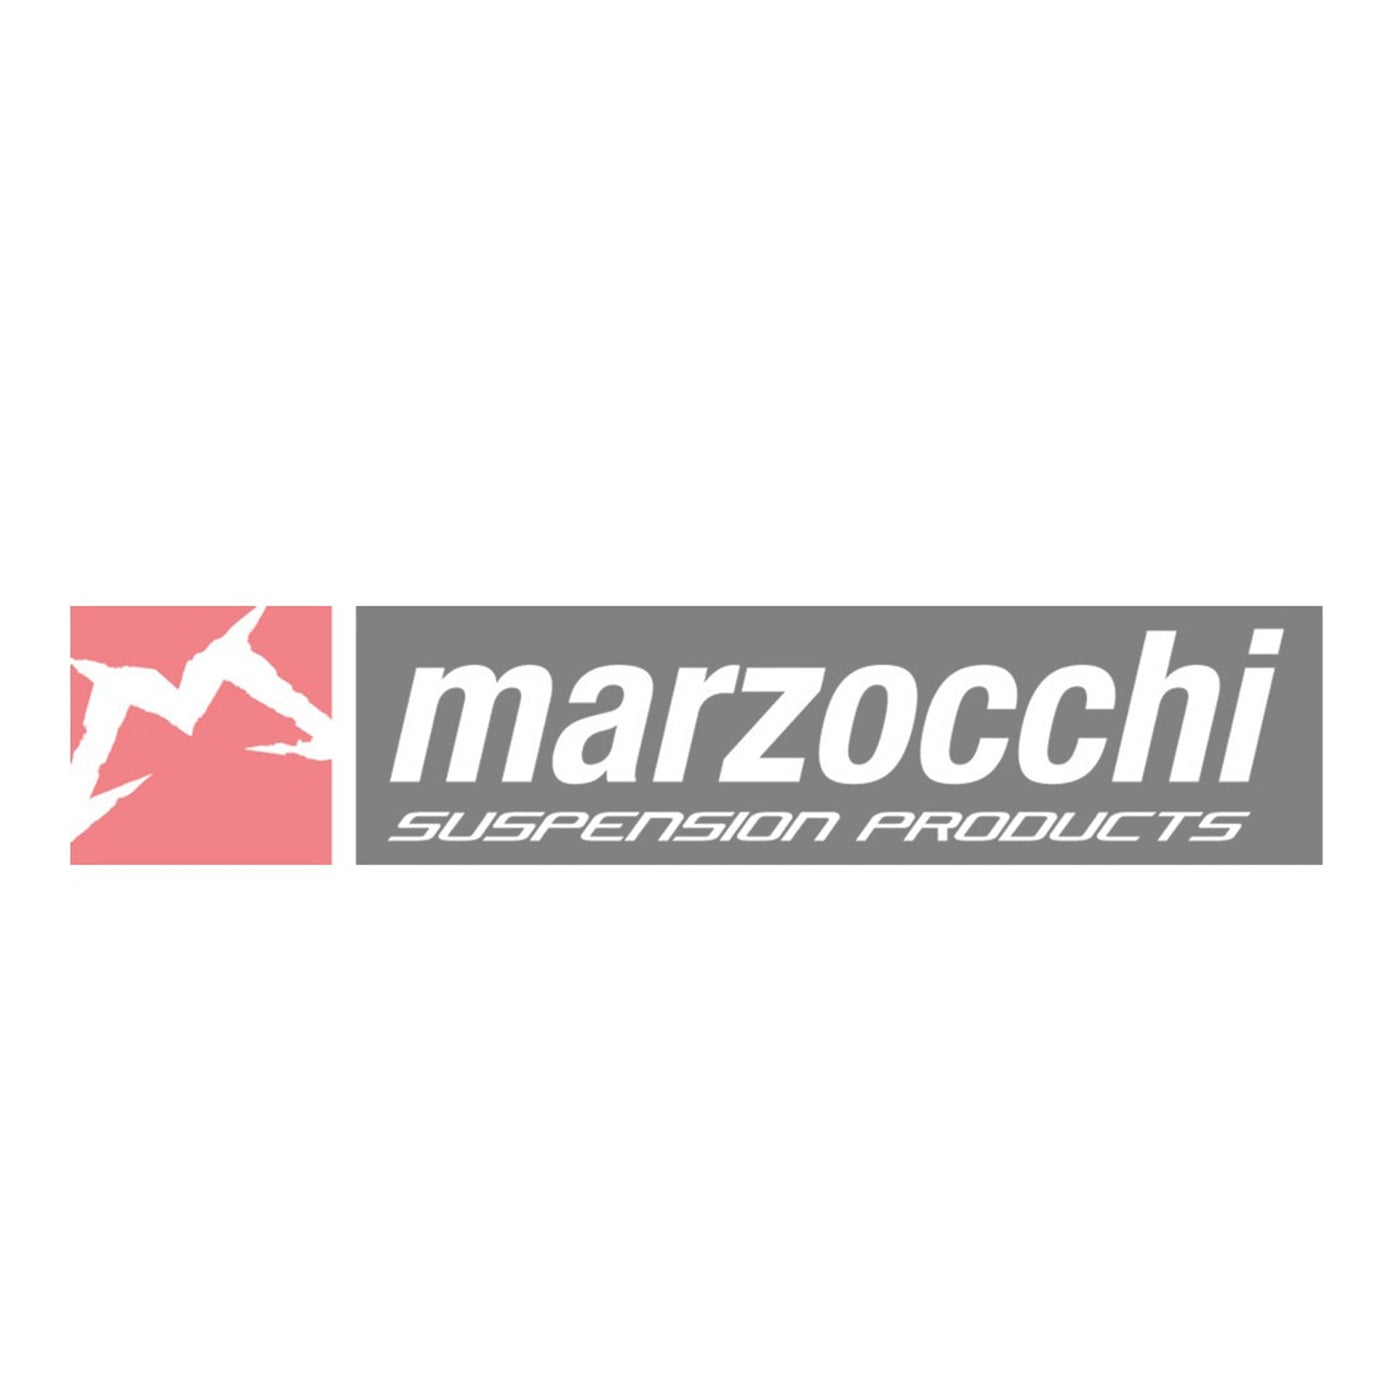 Marzocchi (2019+) Dust wiper finder